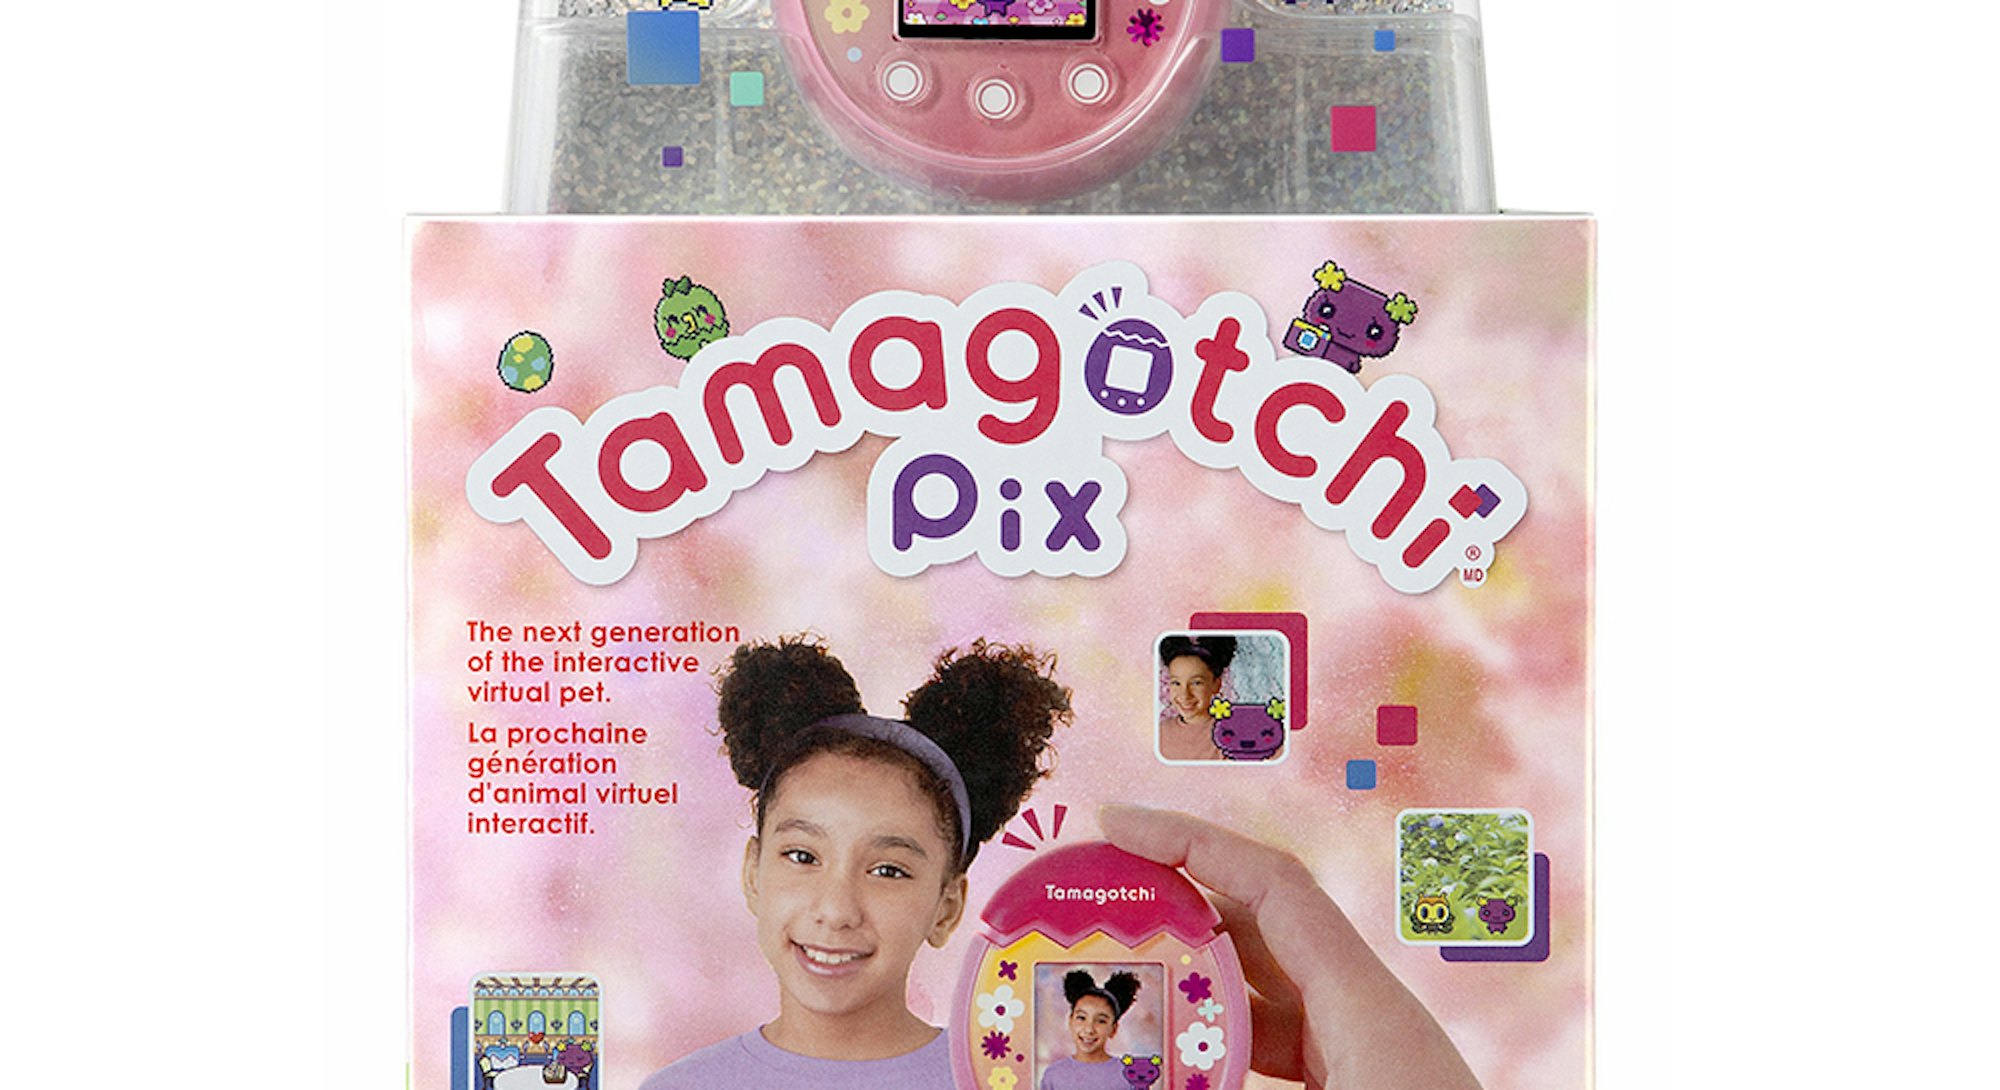 Original Tamagotchi Pix product photo, in the box